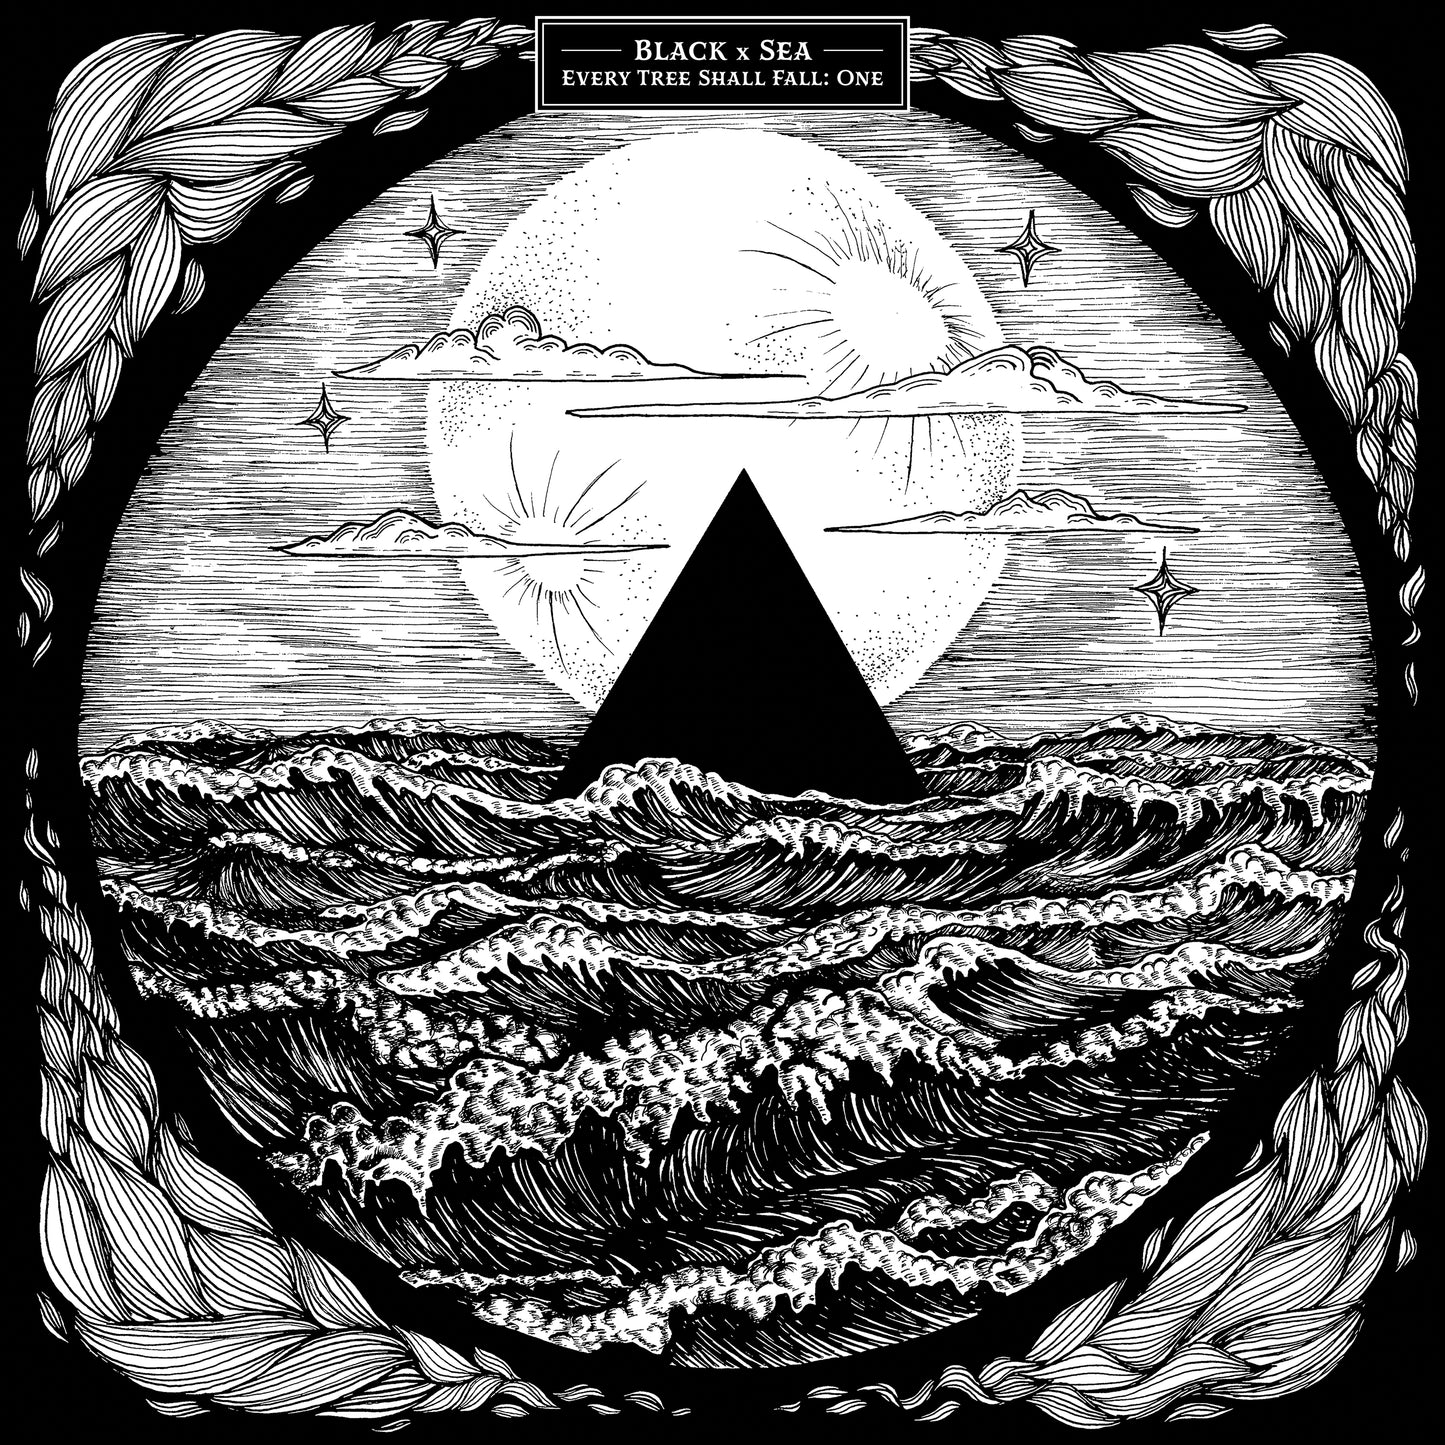 Black x Sea - Every Tree Shall Fall: One vinyl